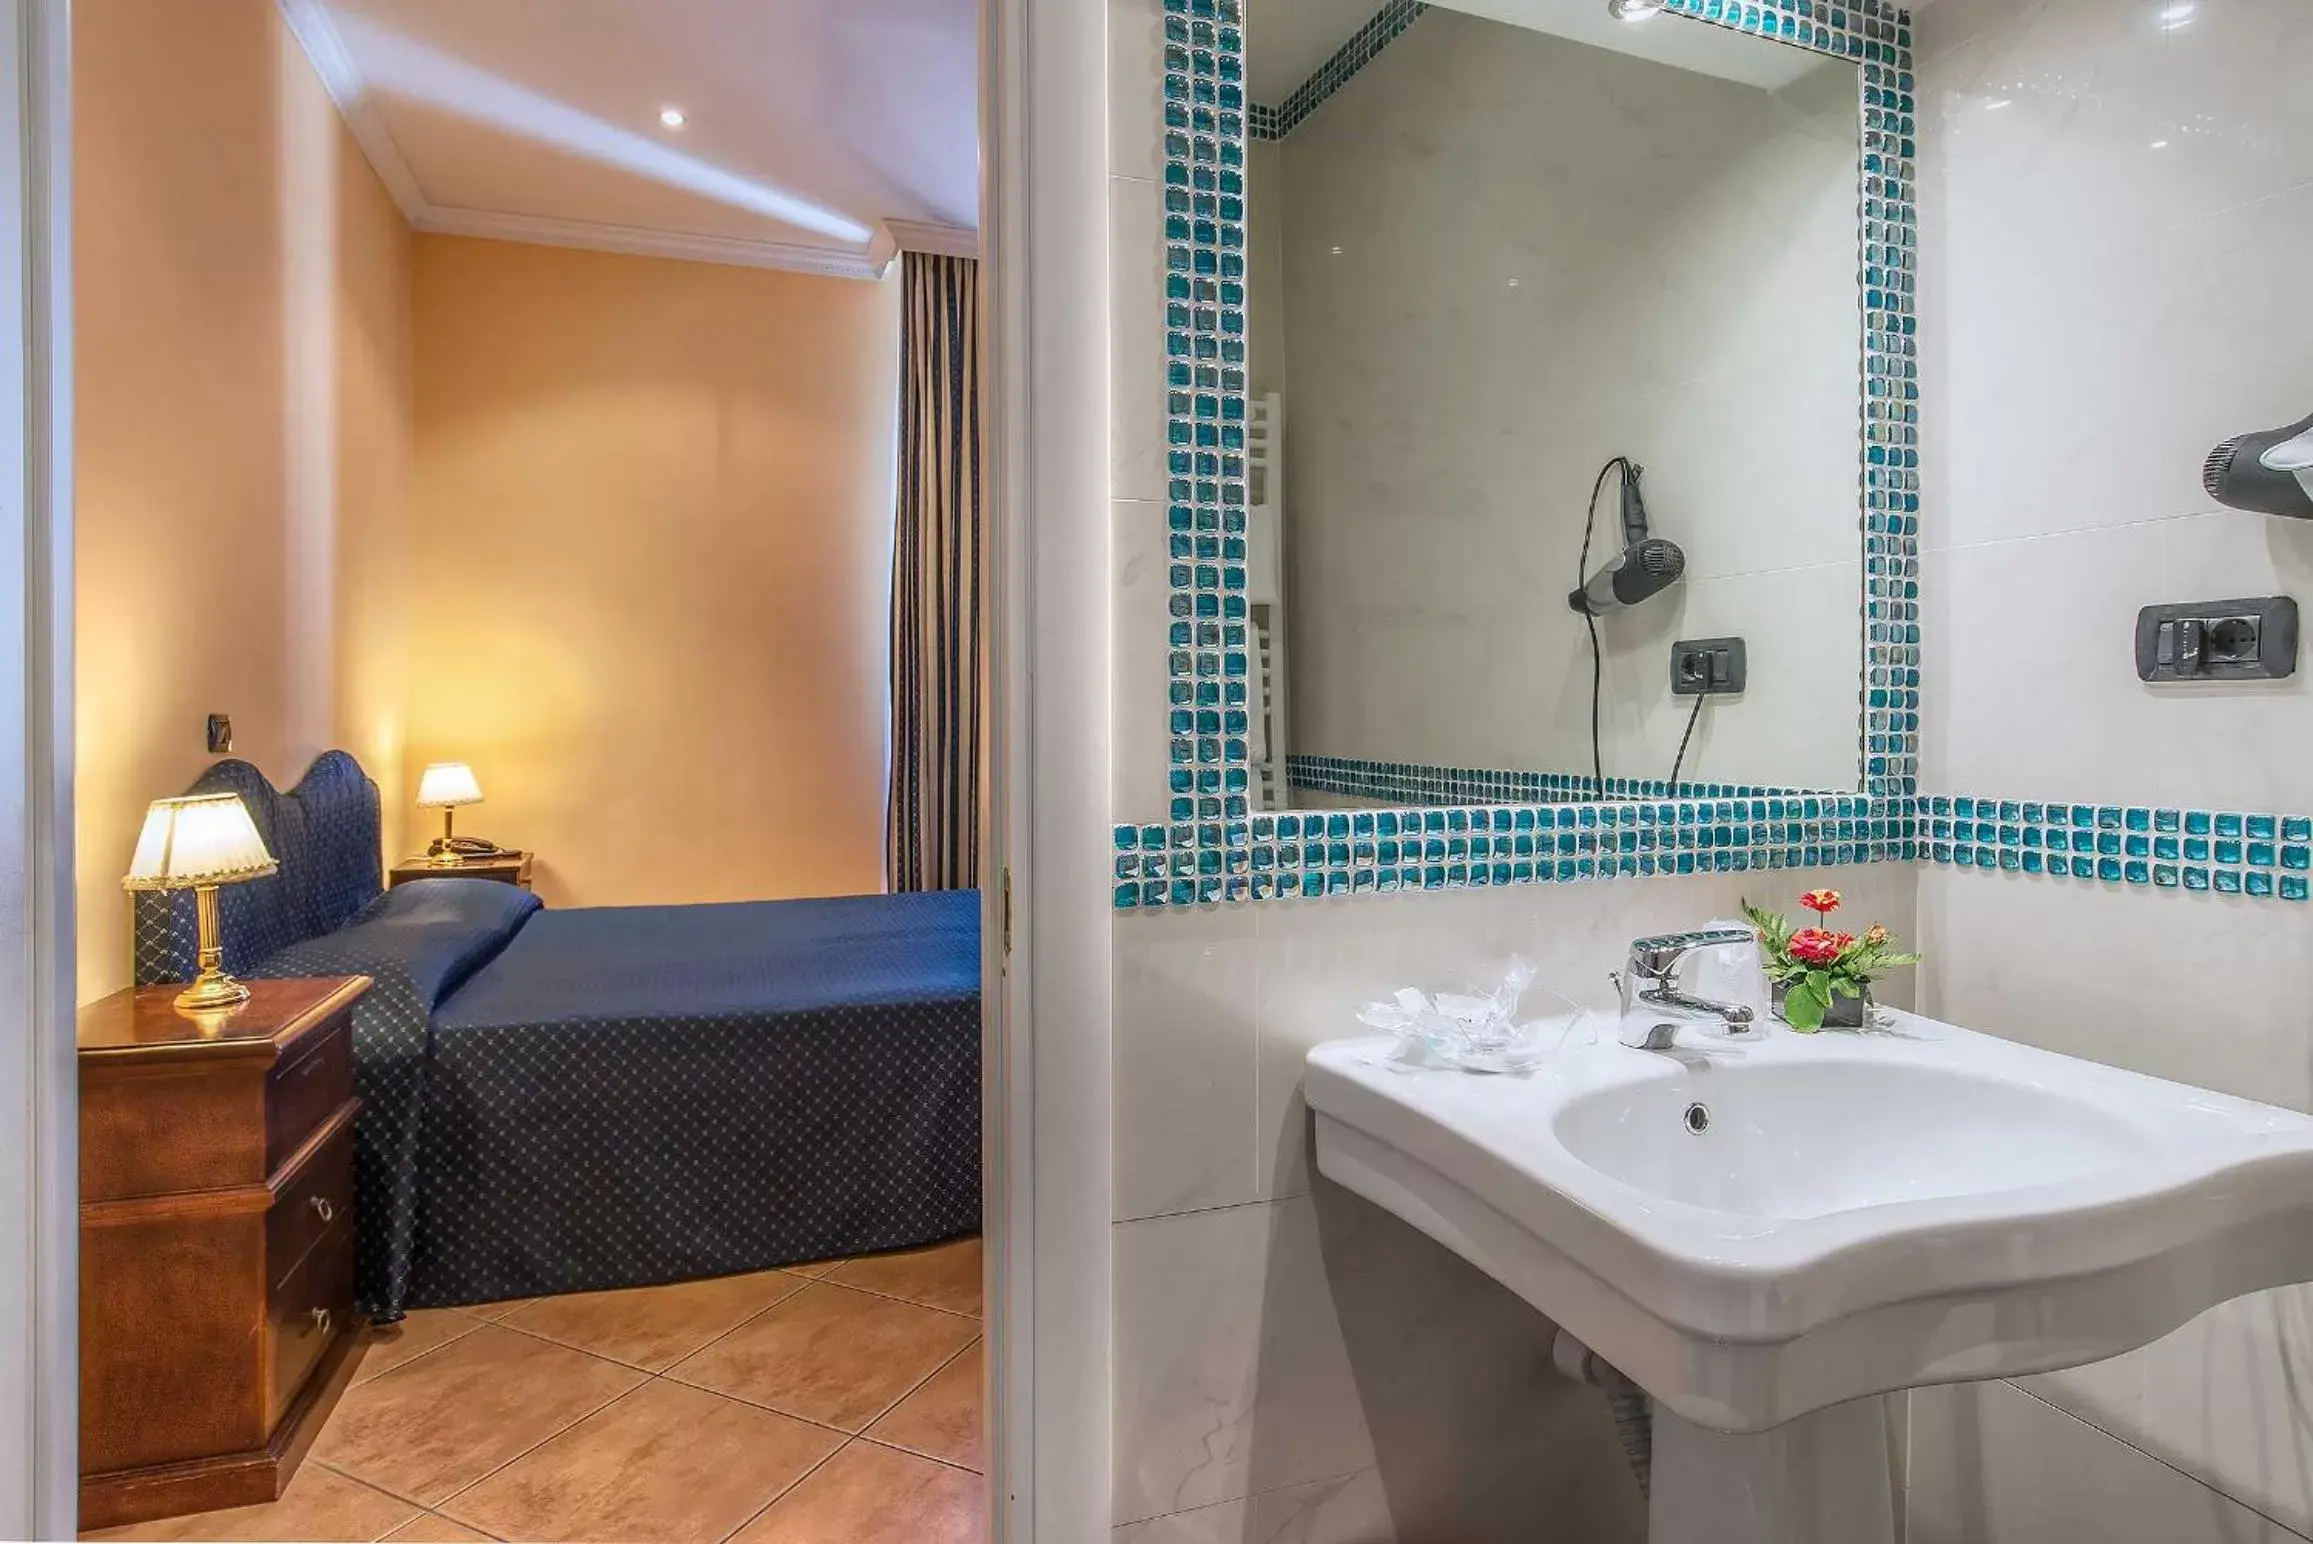 Photo of the whole room, Bathroom in Hotel Caracciolo